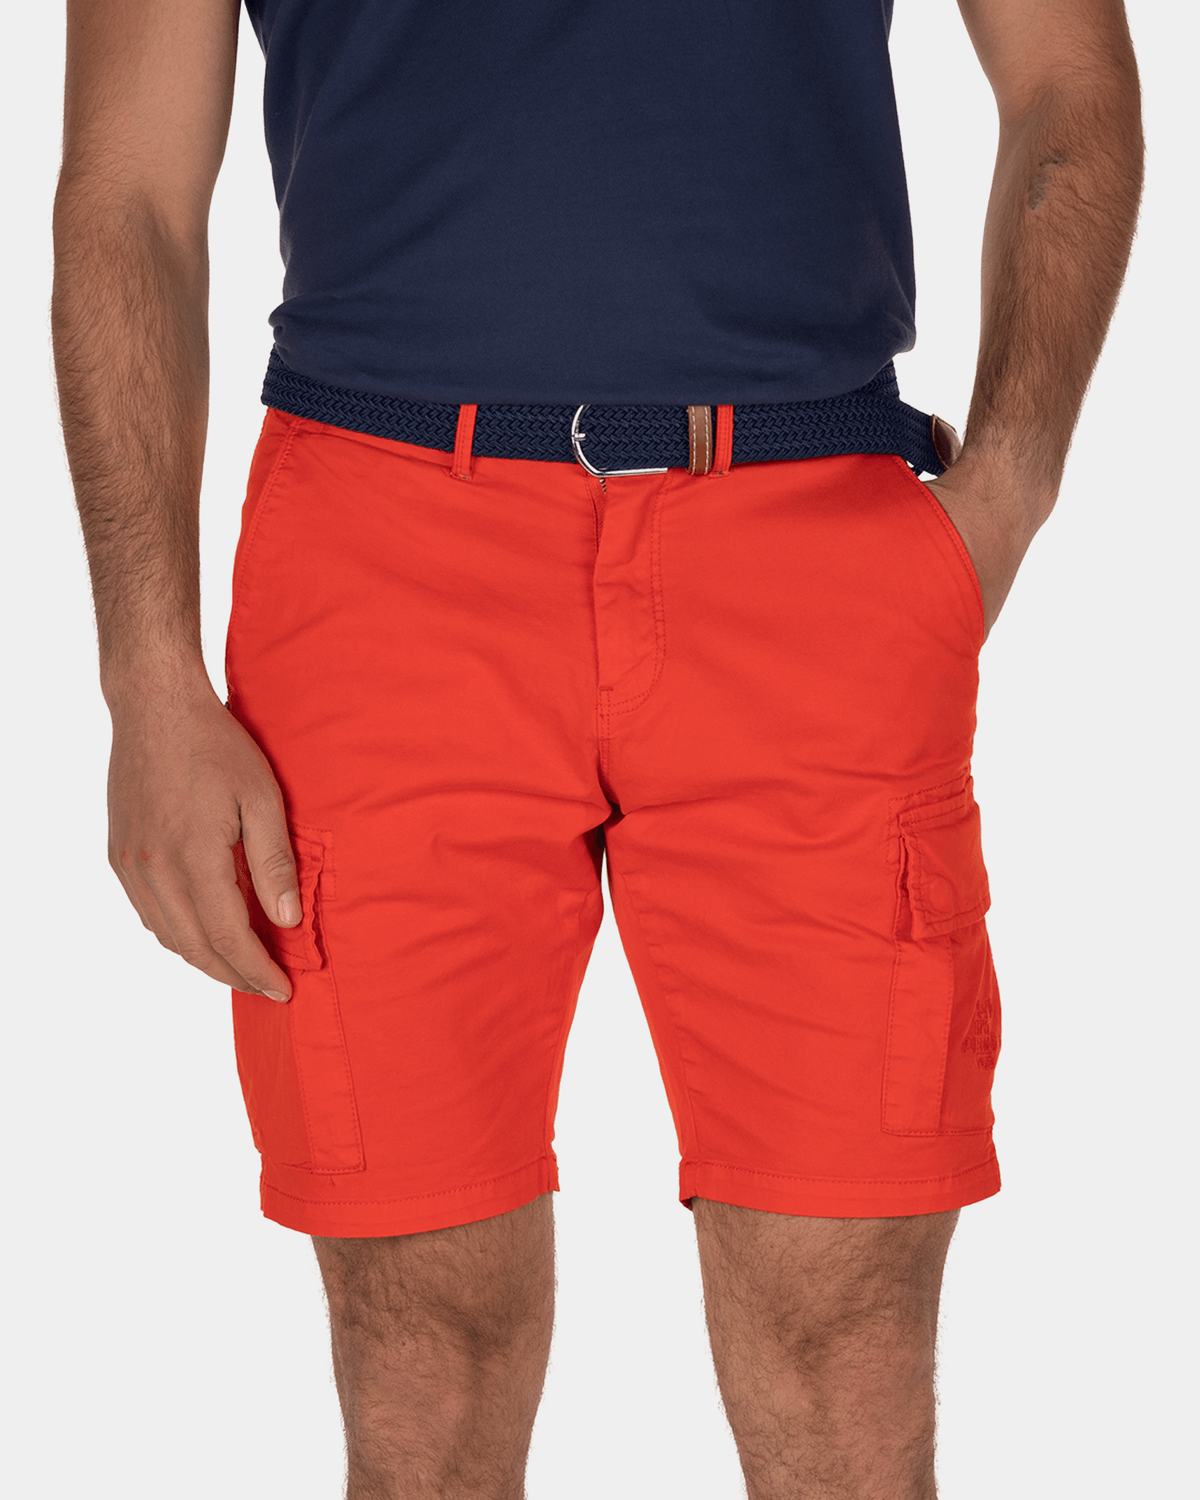 Cargo shorts Mission Bay - Pomgrate Orange